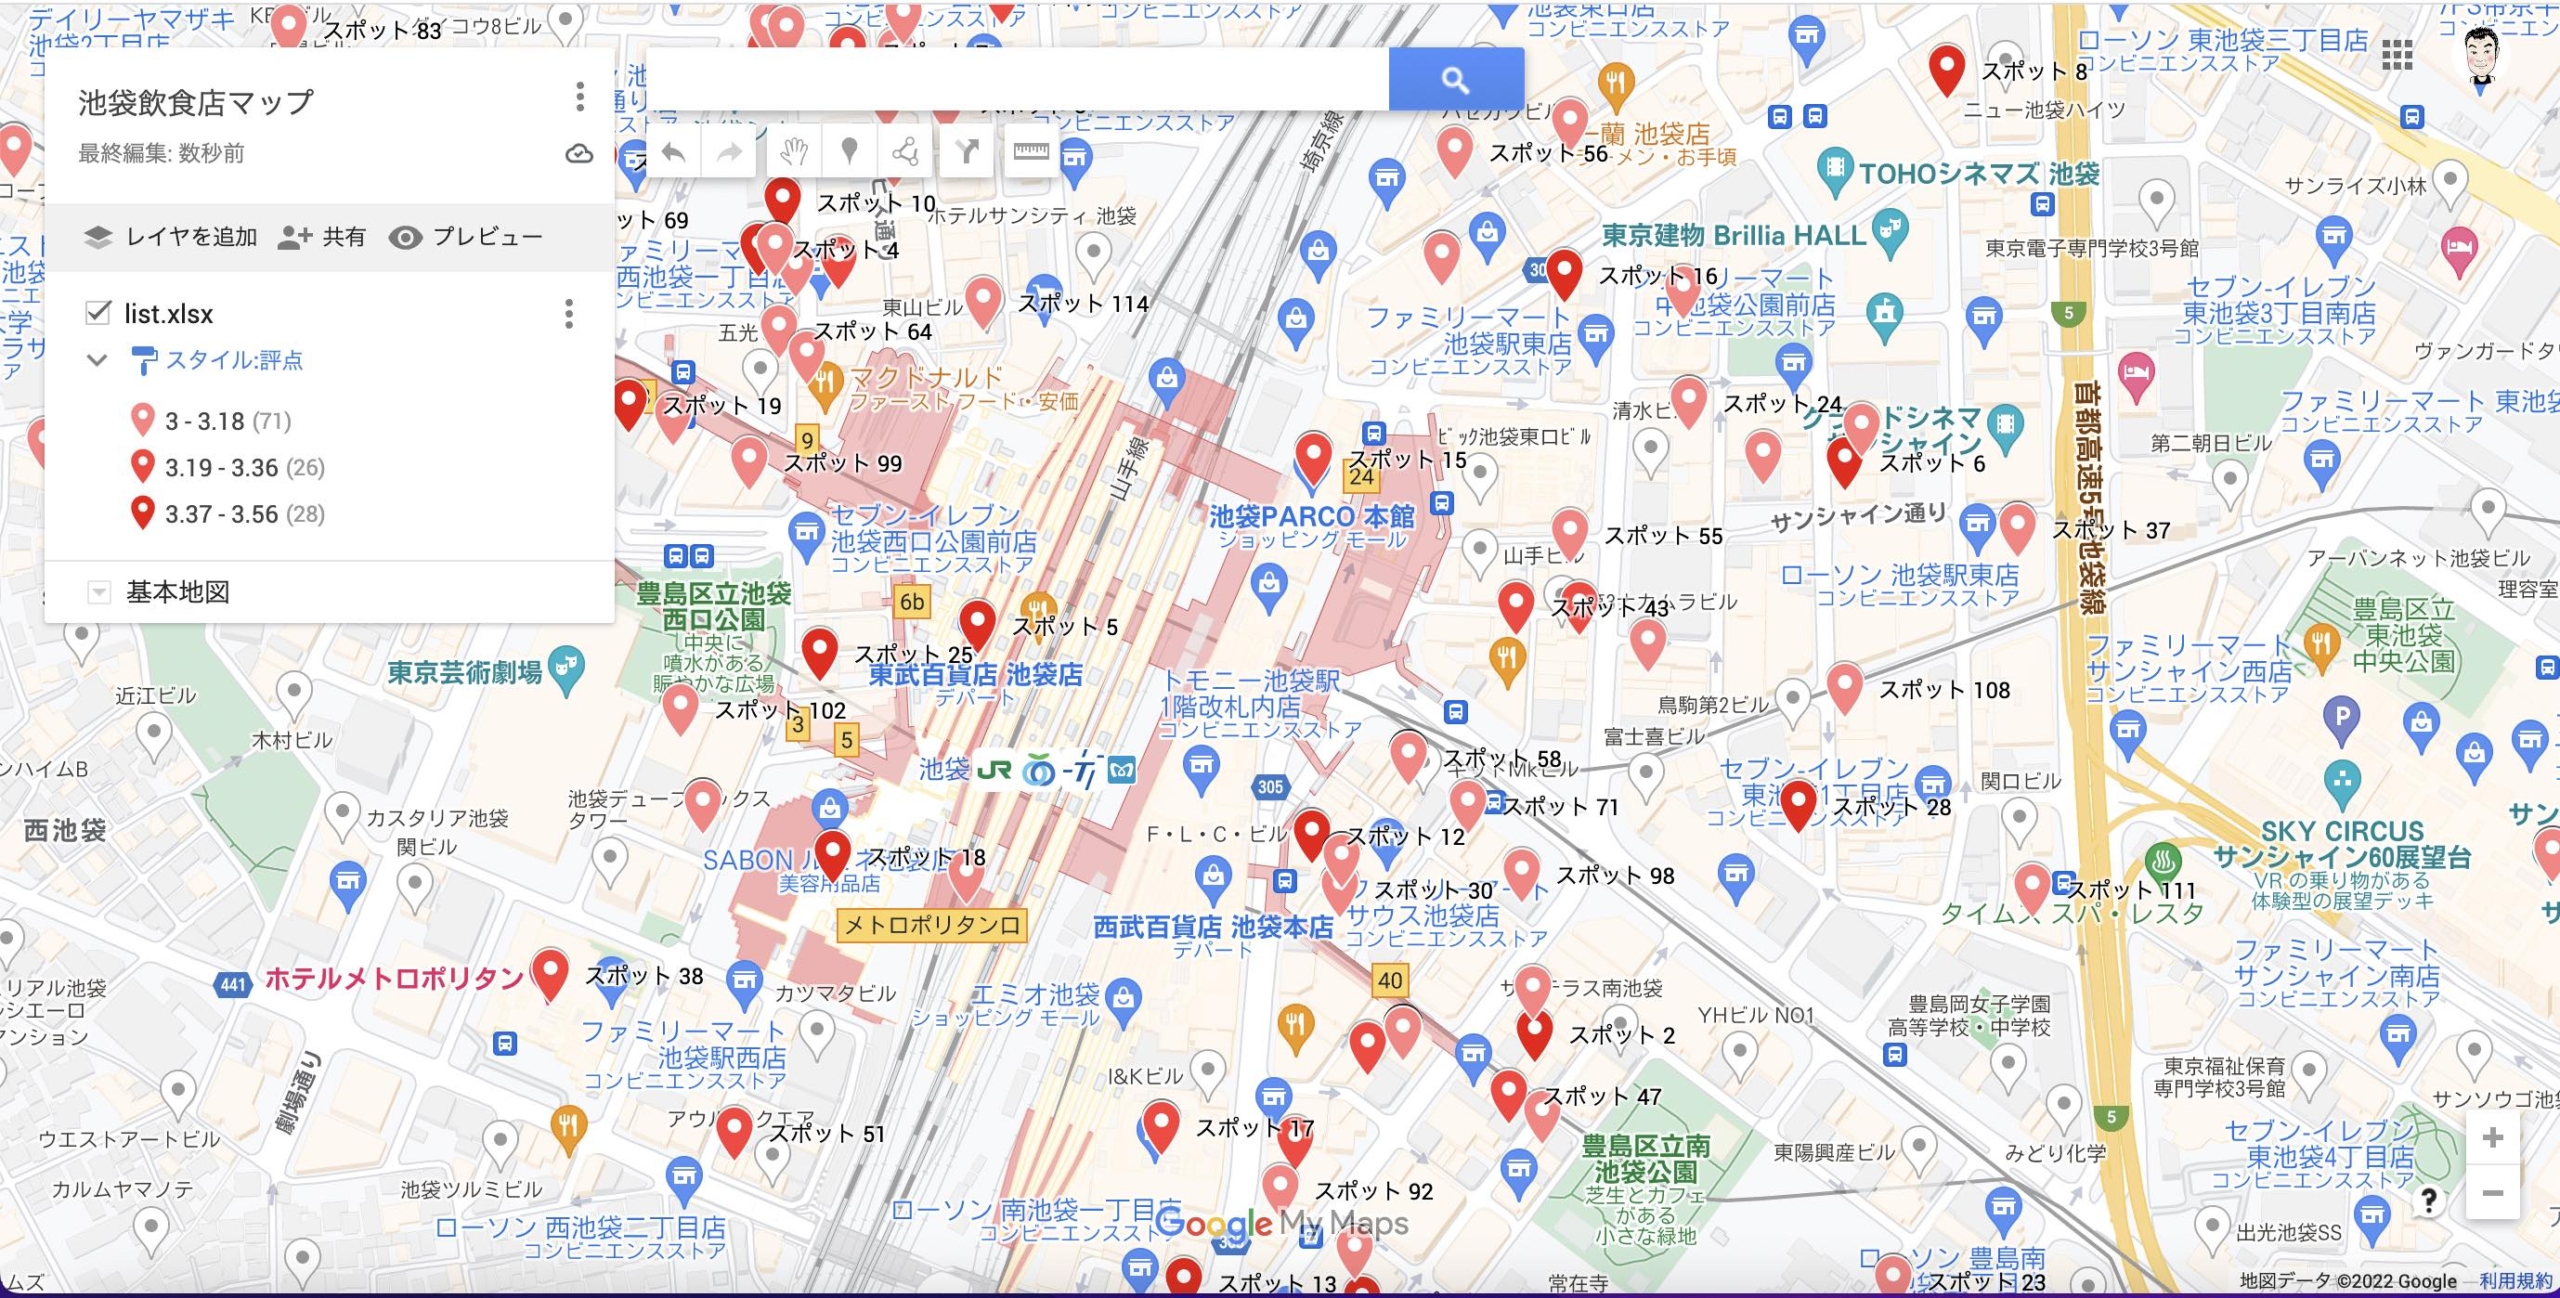 Excel住所録をGoogleマップに取り込めば、スマートフォンでも使える、自分だけの取引先地図に変身